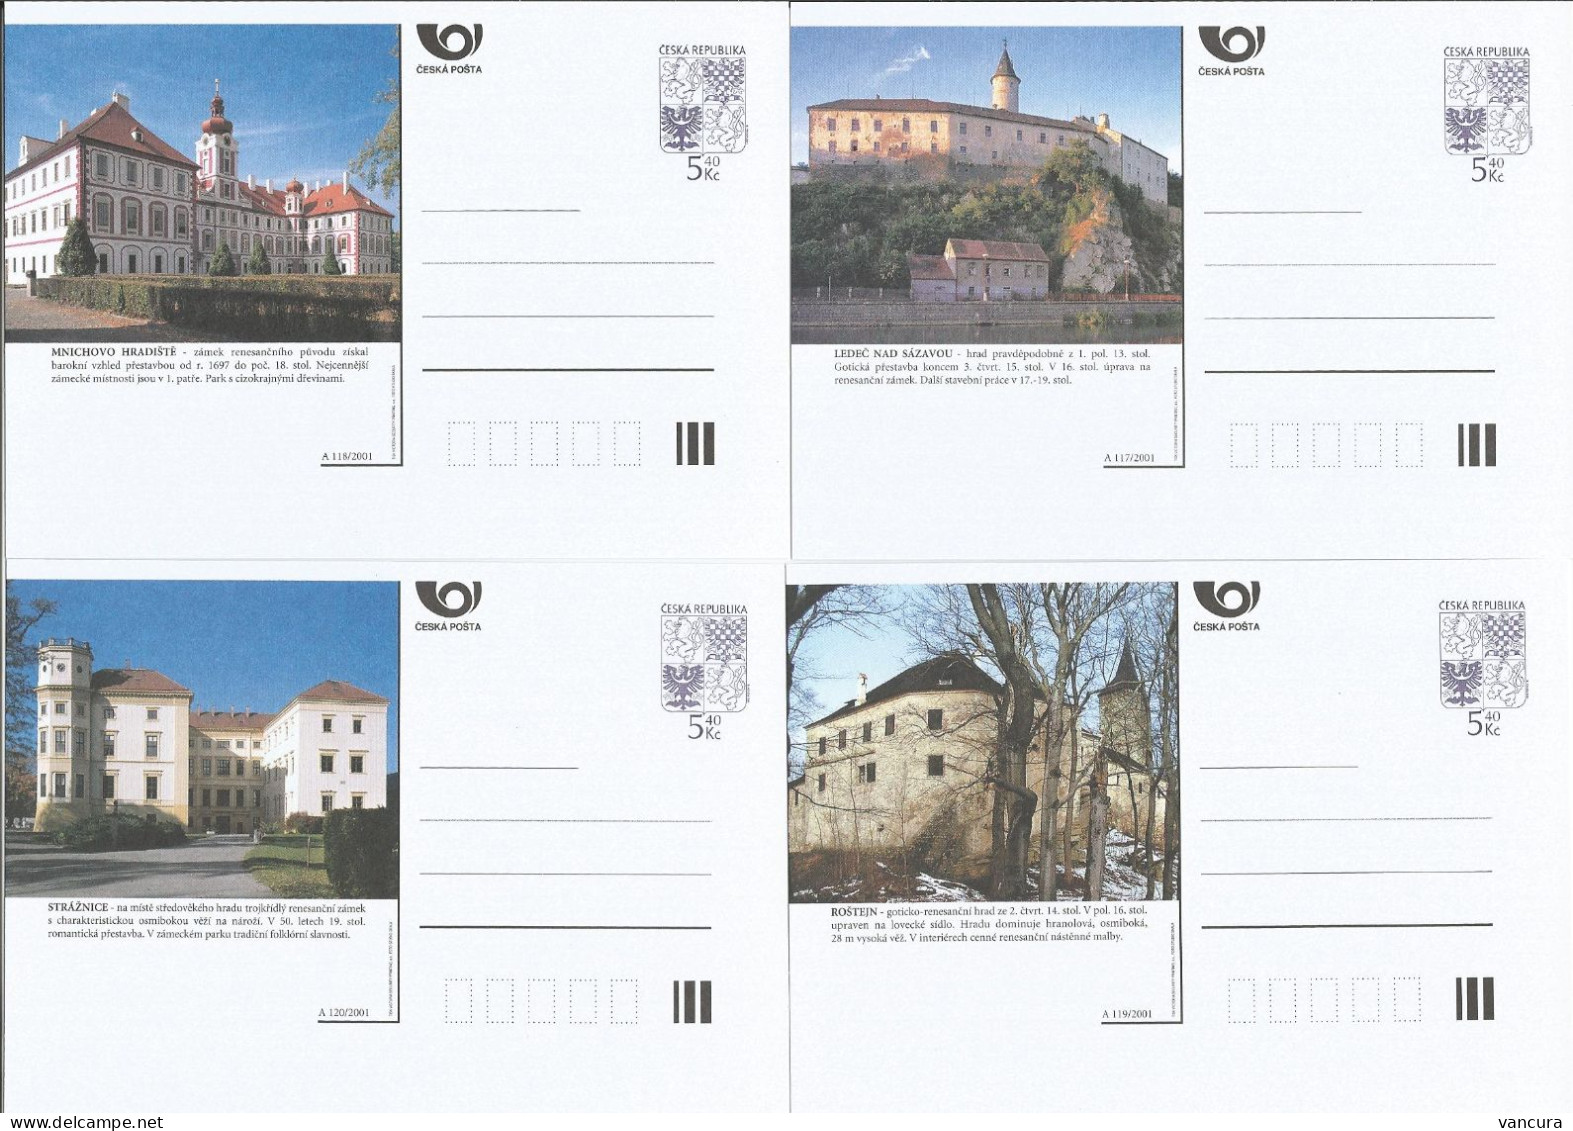 CDV 66 A - Czech Republic Castles And Mansions 2001 - Kastelen